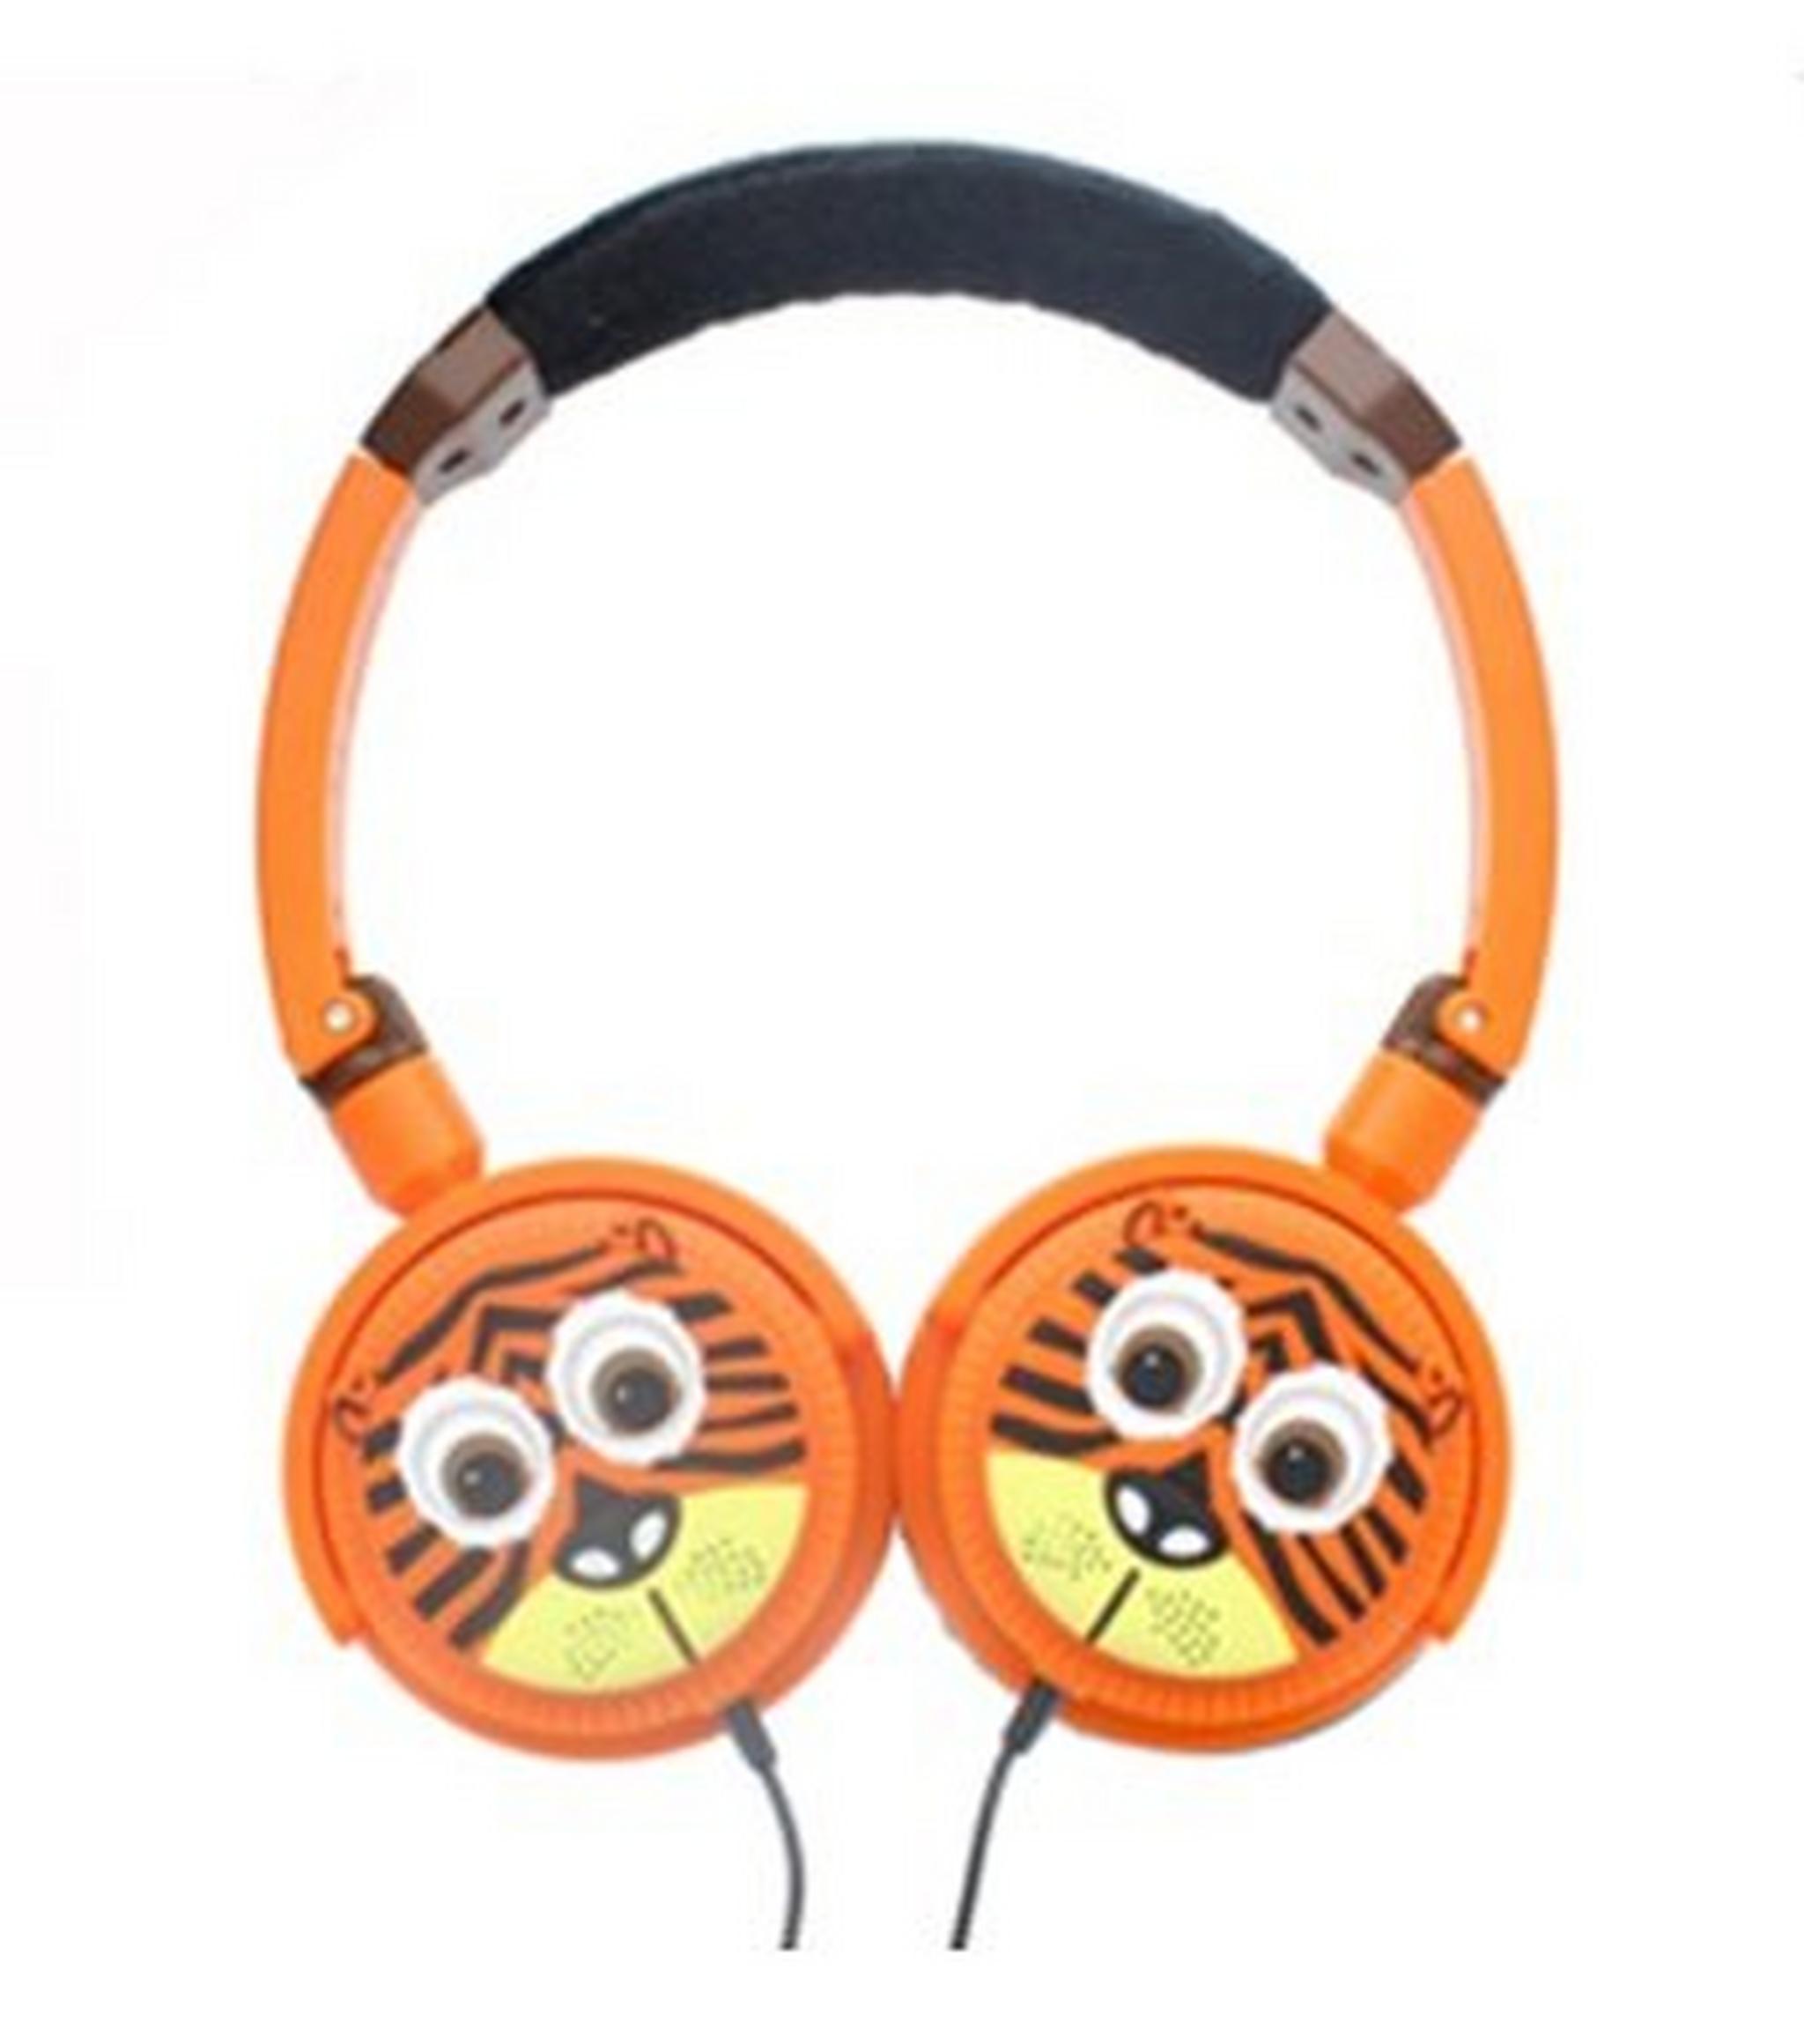 TabZoo Tiger Wired Headset - Orange